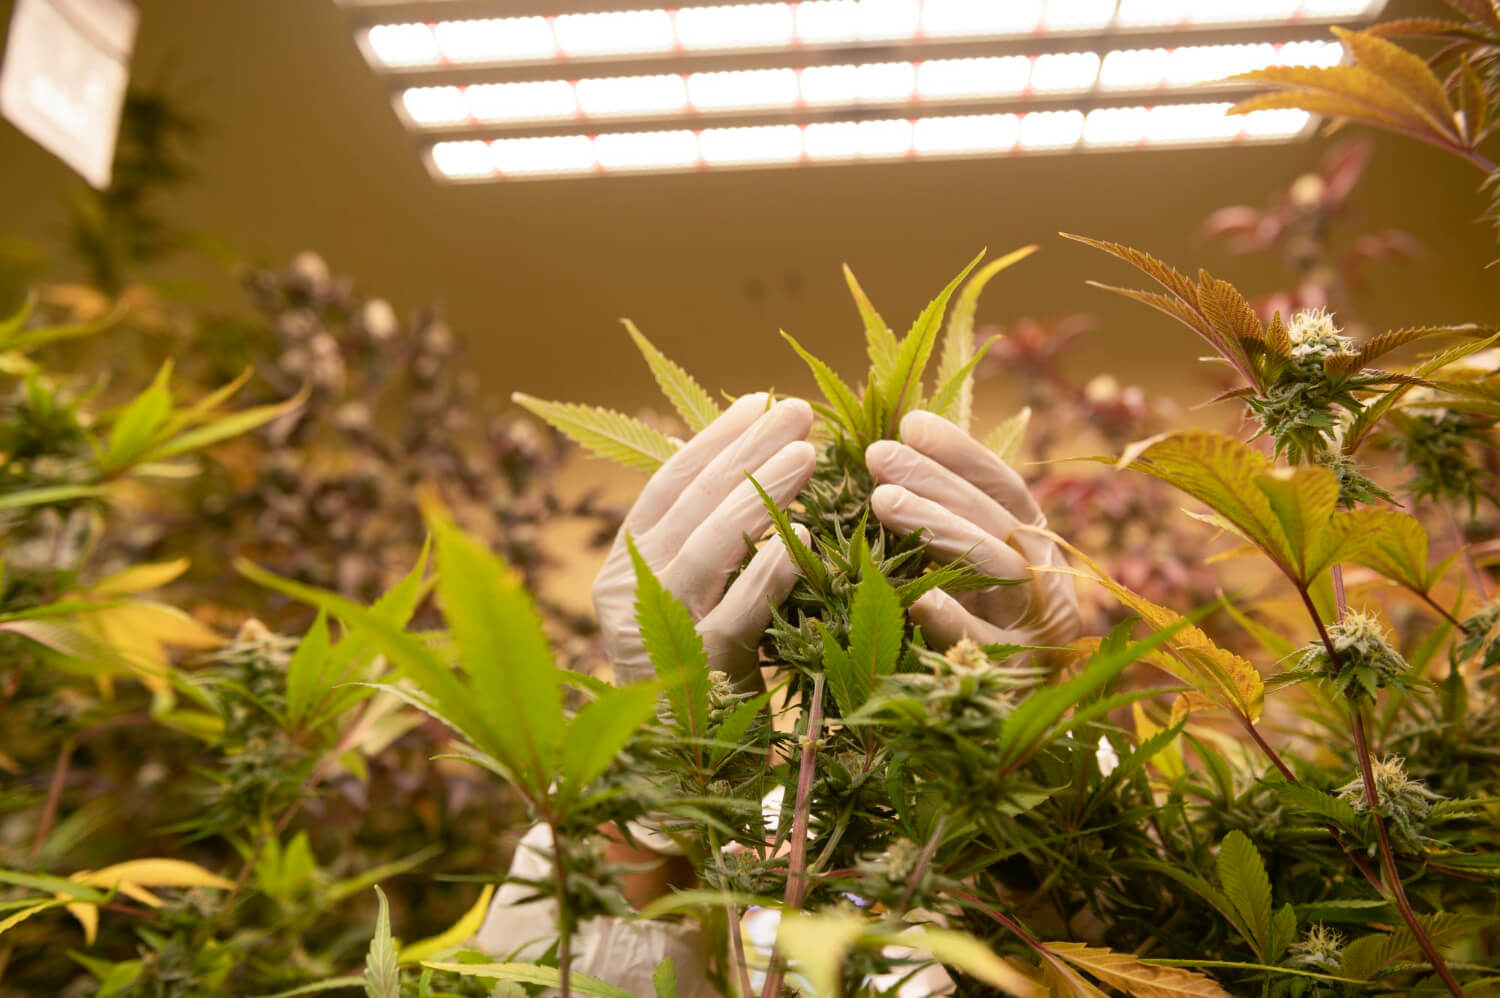 Safari Flower Shifts To International Medical Cannabis Amid Financial Challenges